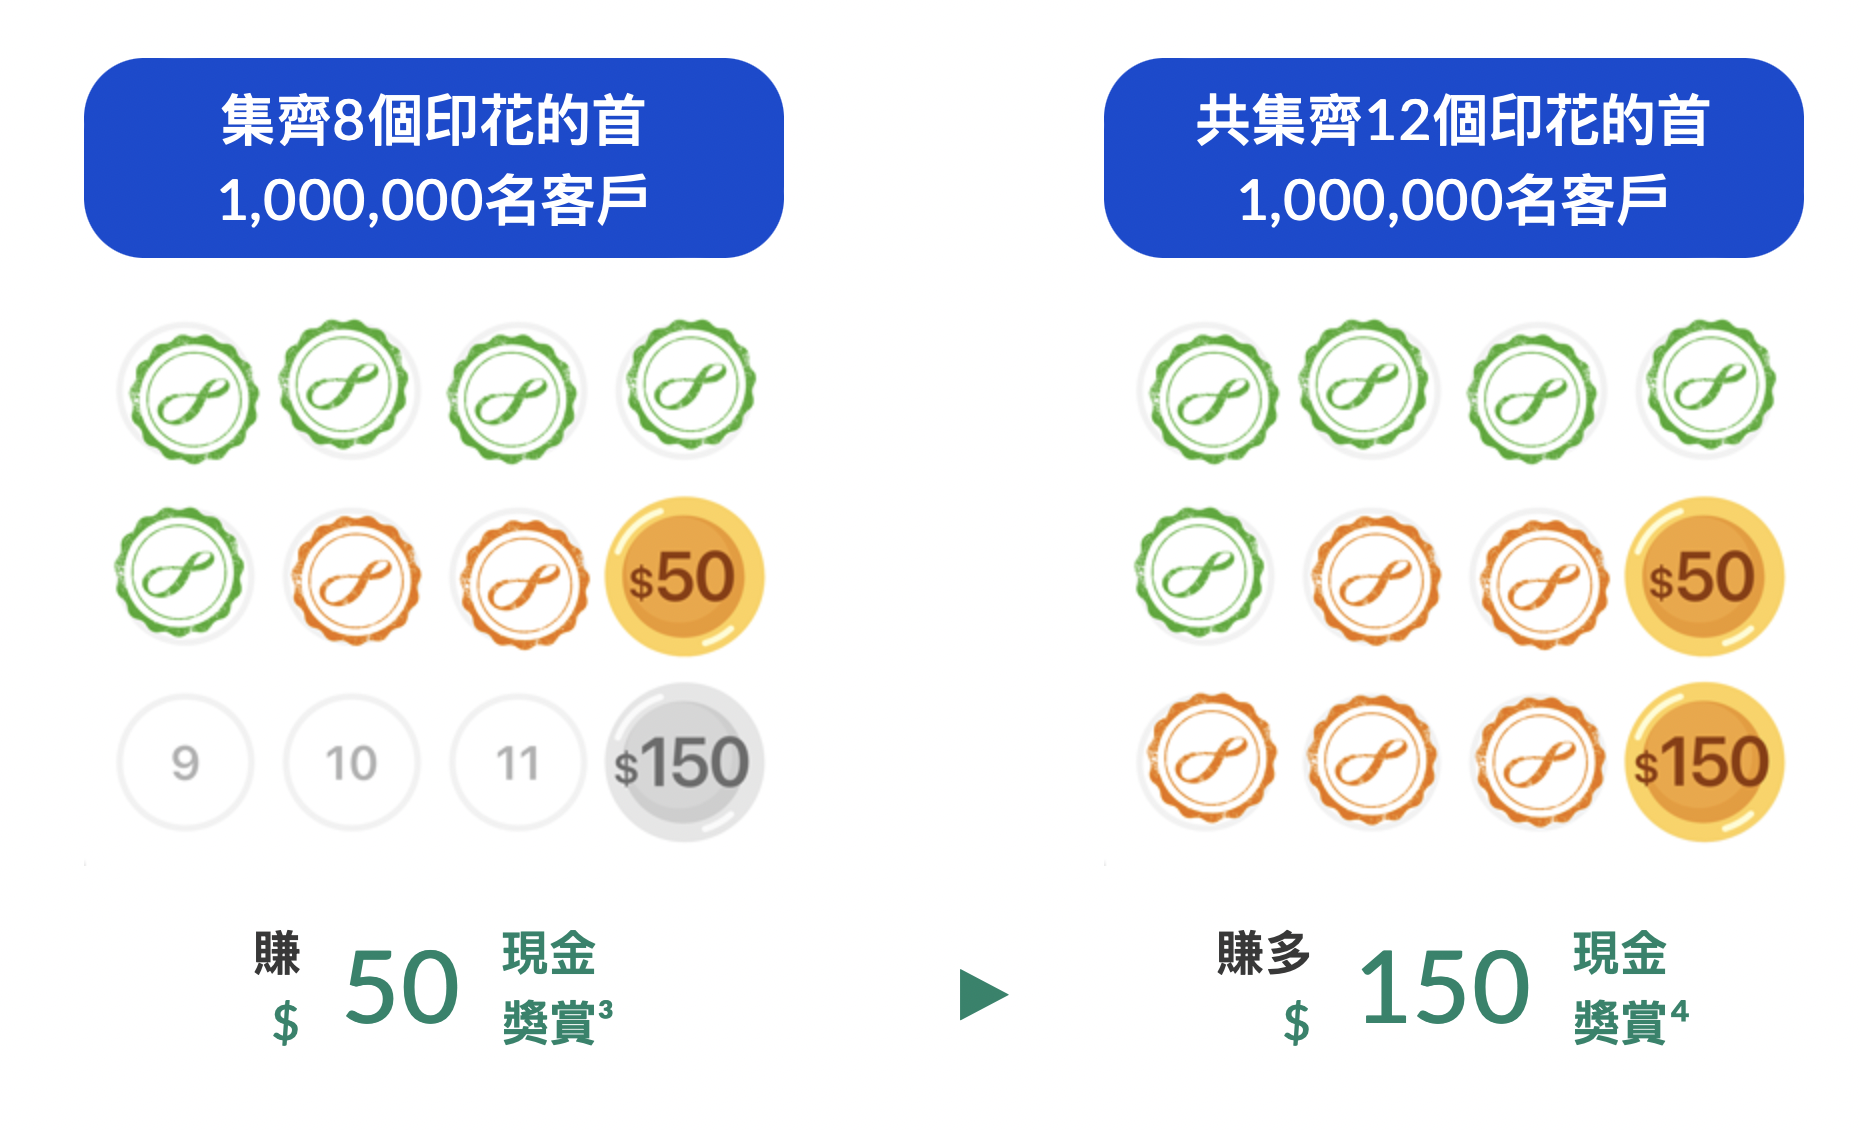 【AE Explorer 信用卡】同時申請附屬卡送多HK$400！ 迎新高達HK$2,280獎賞！新舊客都有份！